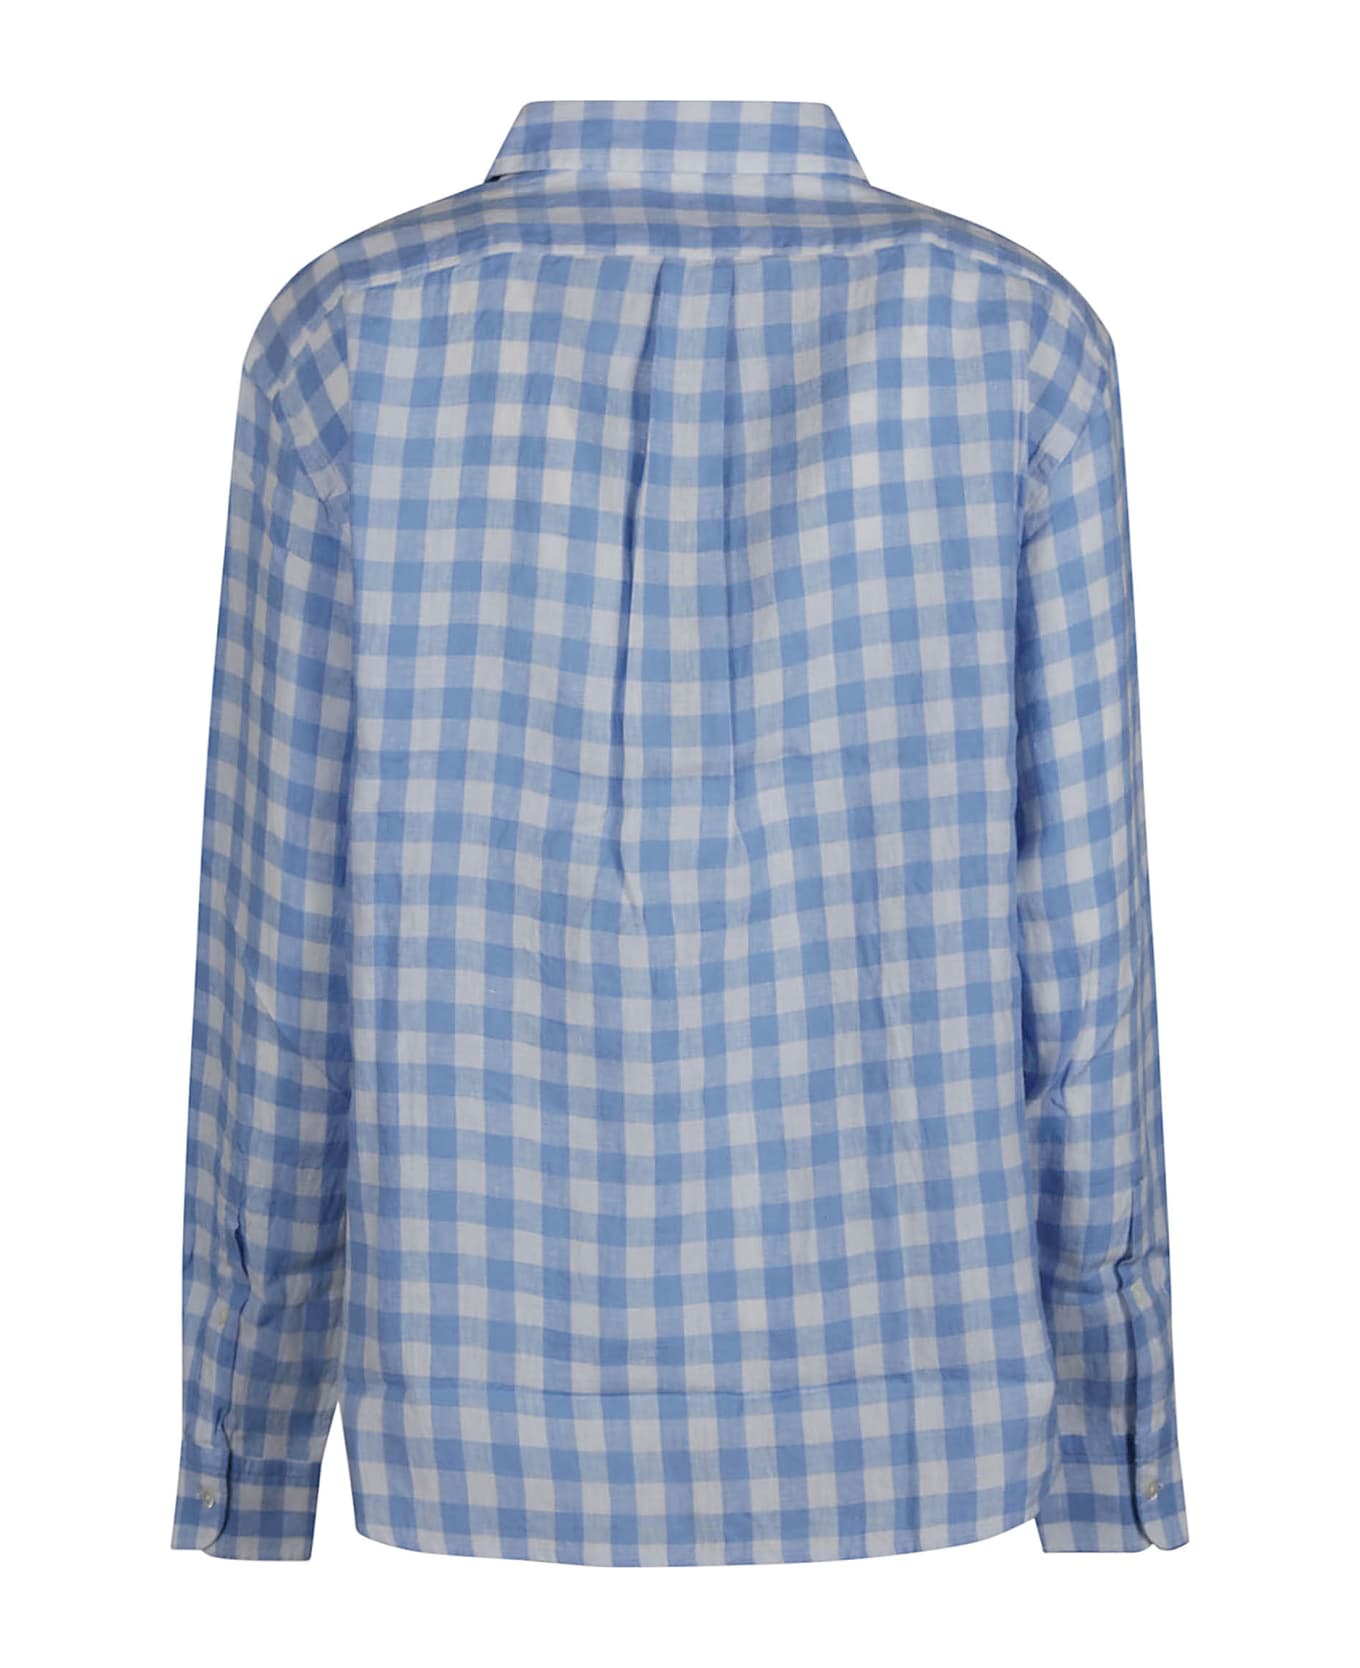 Polo Ralph Lauren Long Sleeve Button Front Shirt - Austin Blue/white